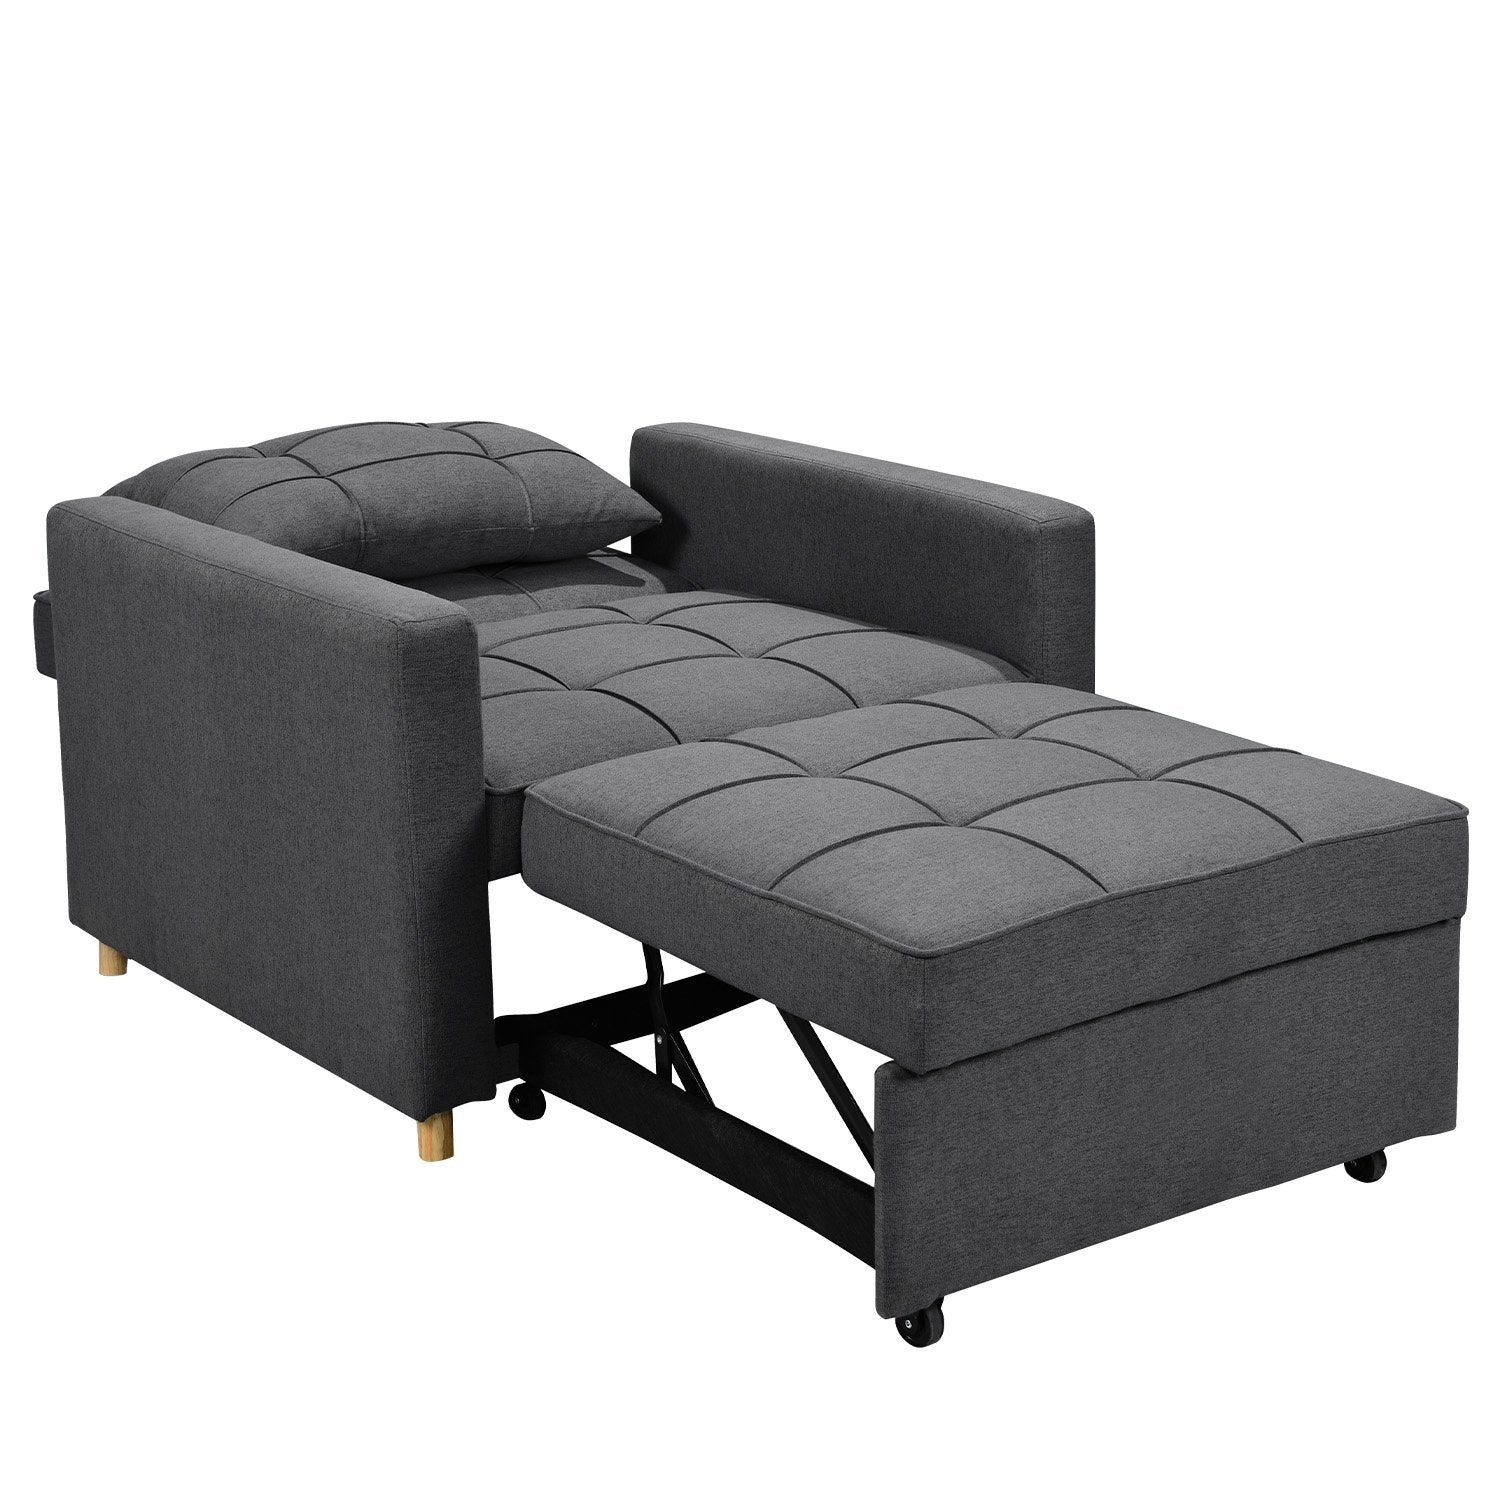 Sarantino Suri 3-in-1 Convertible Lounge Chair Bed - Dark Grey - 0